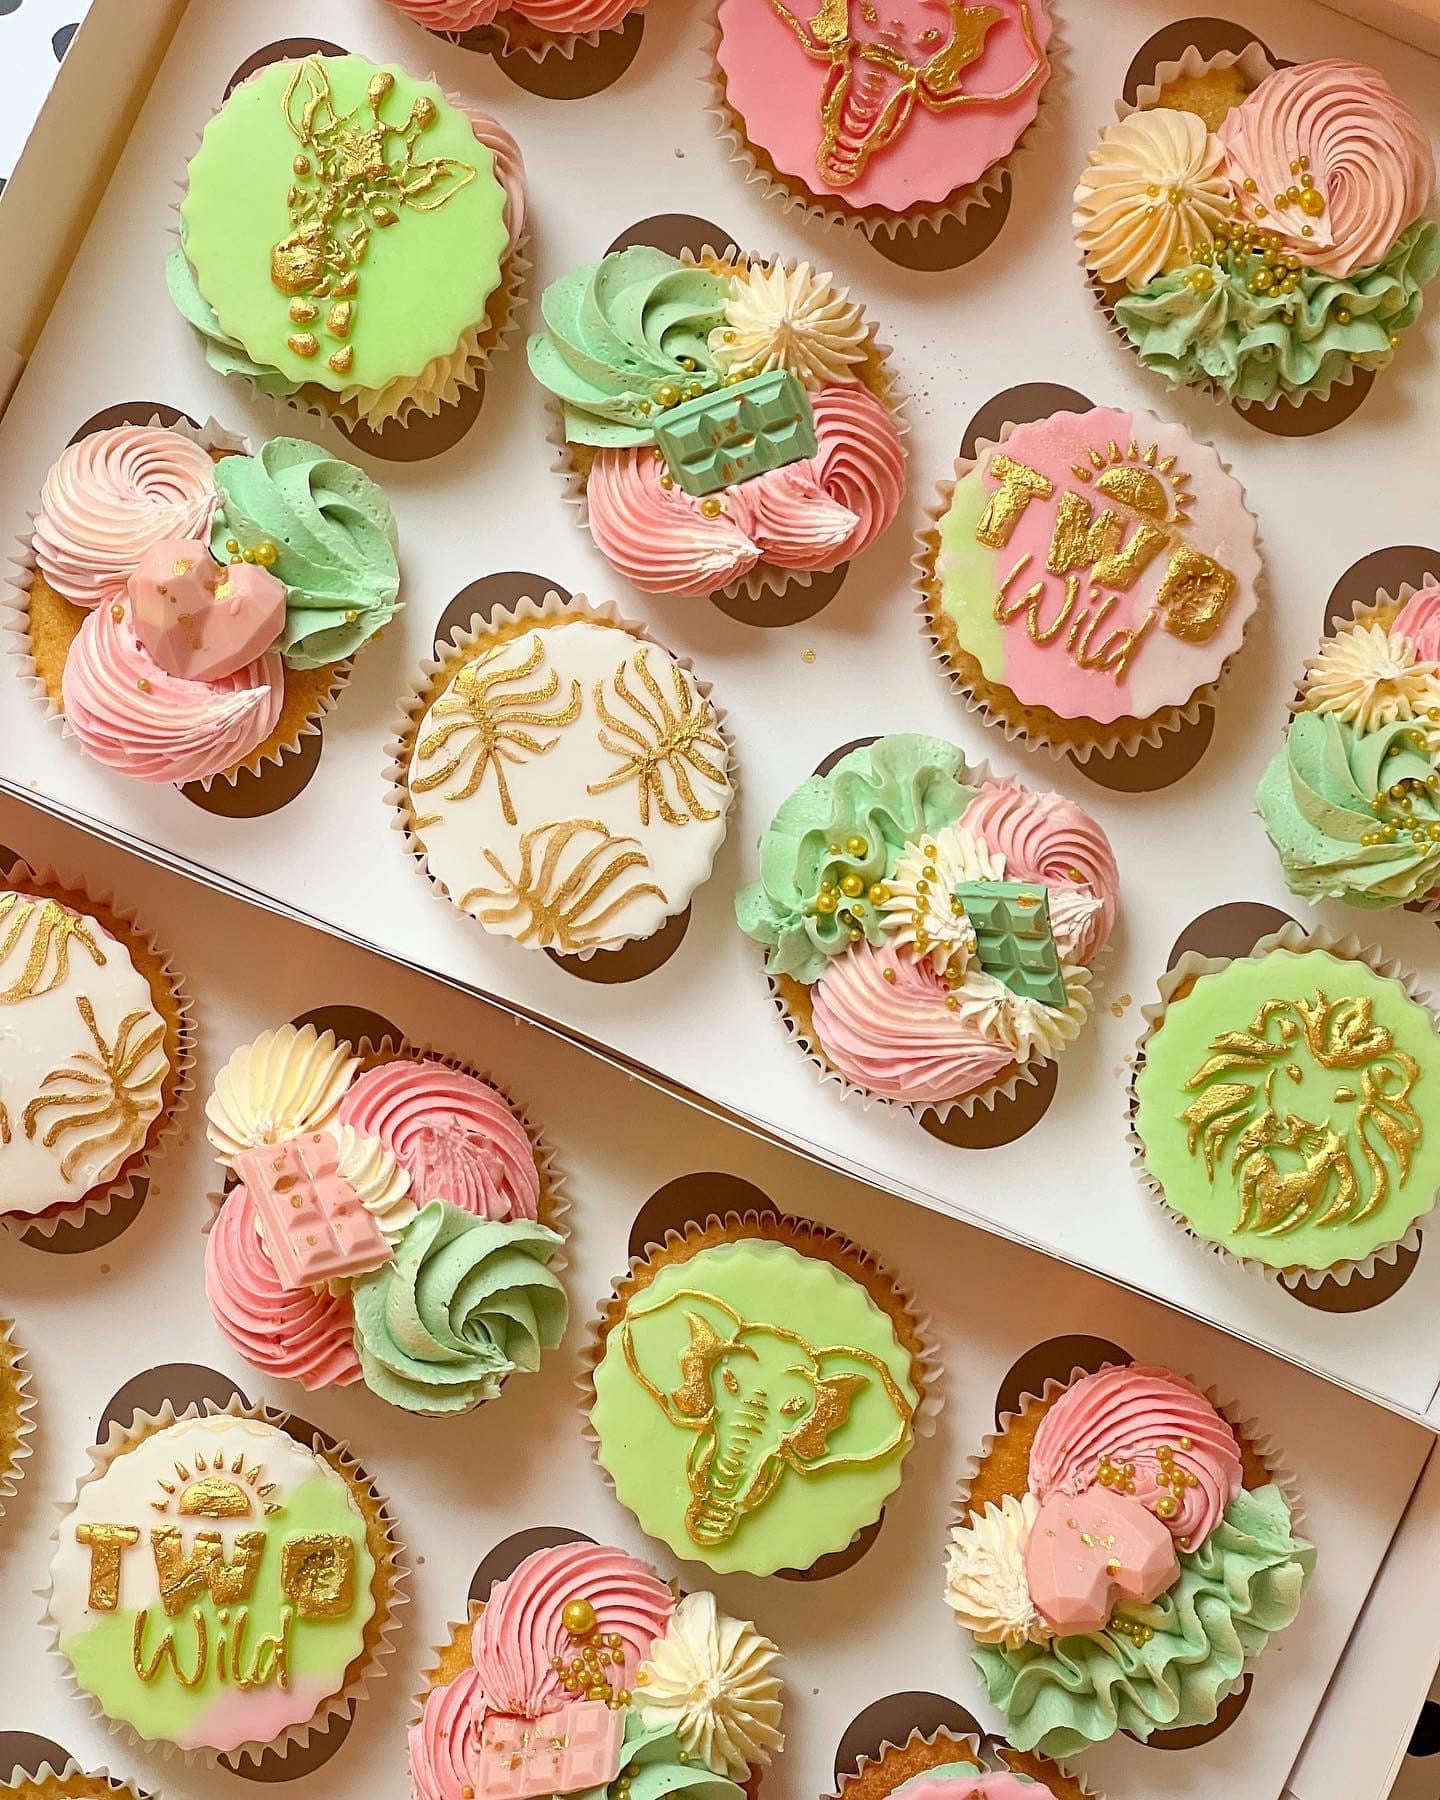 Colour Themed Cupcakes